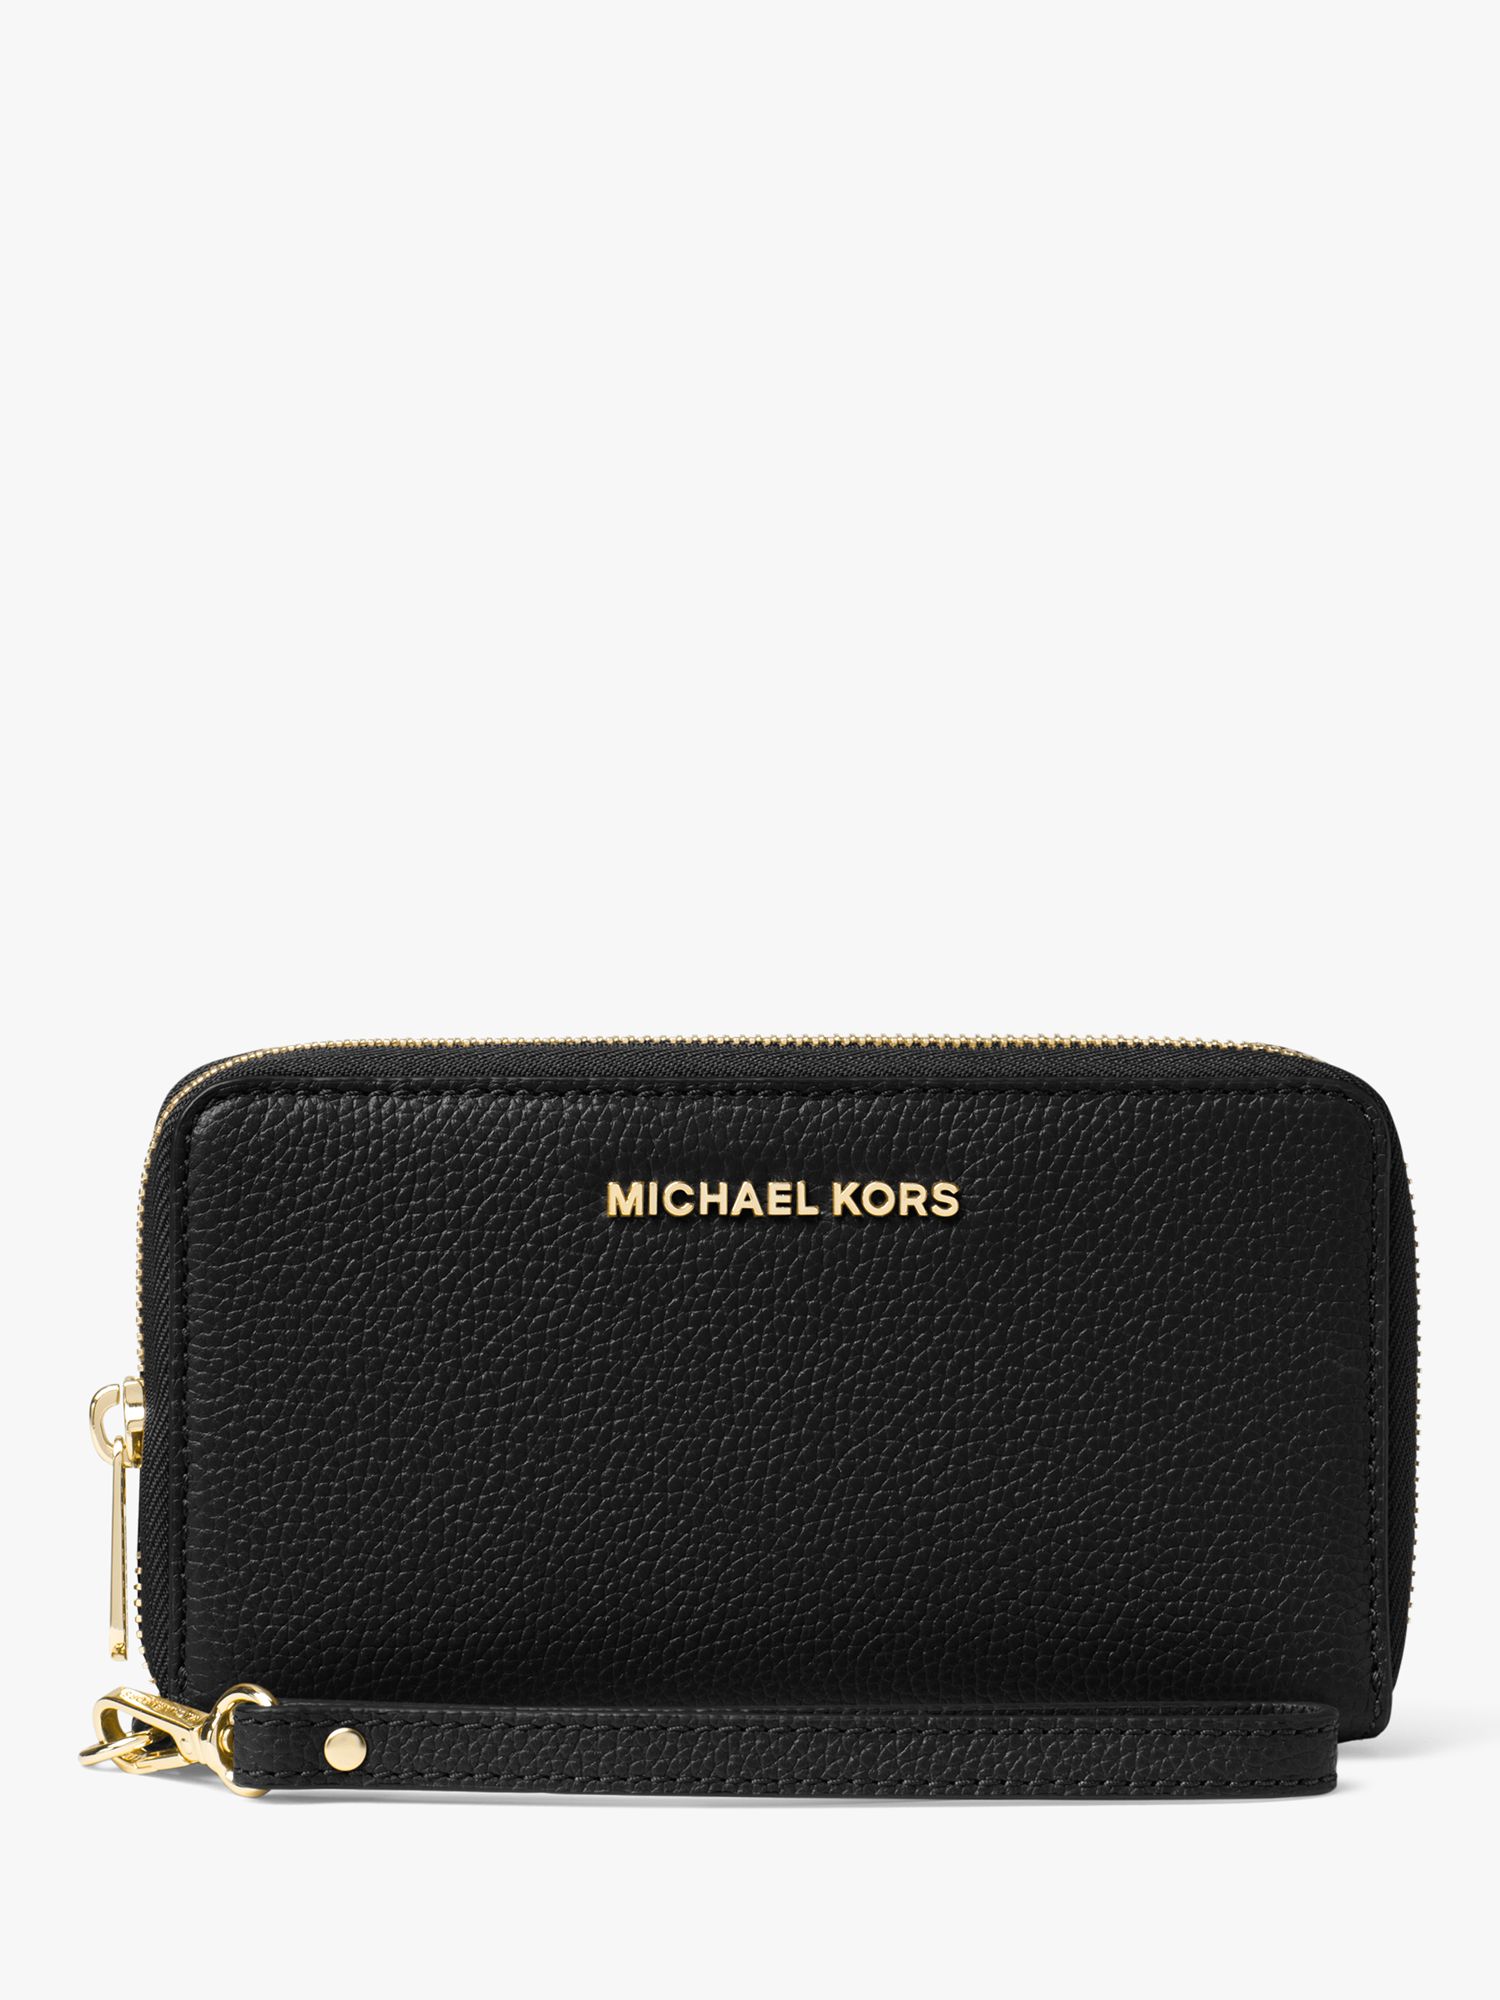 large black michael kors purse